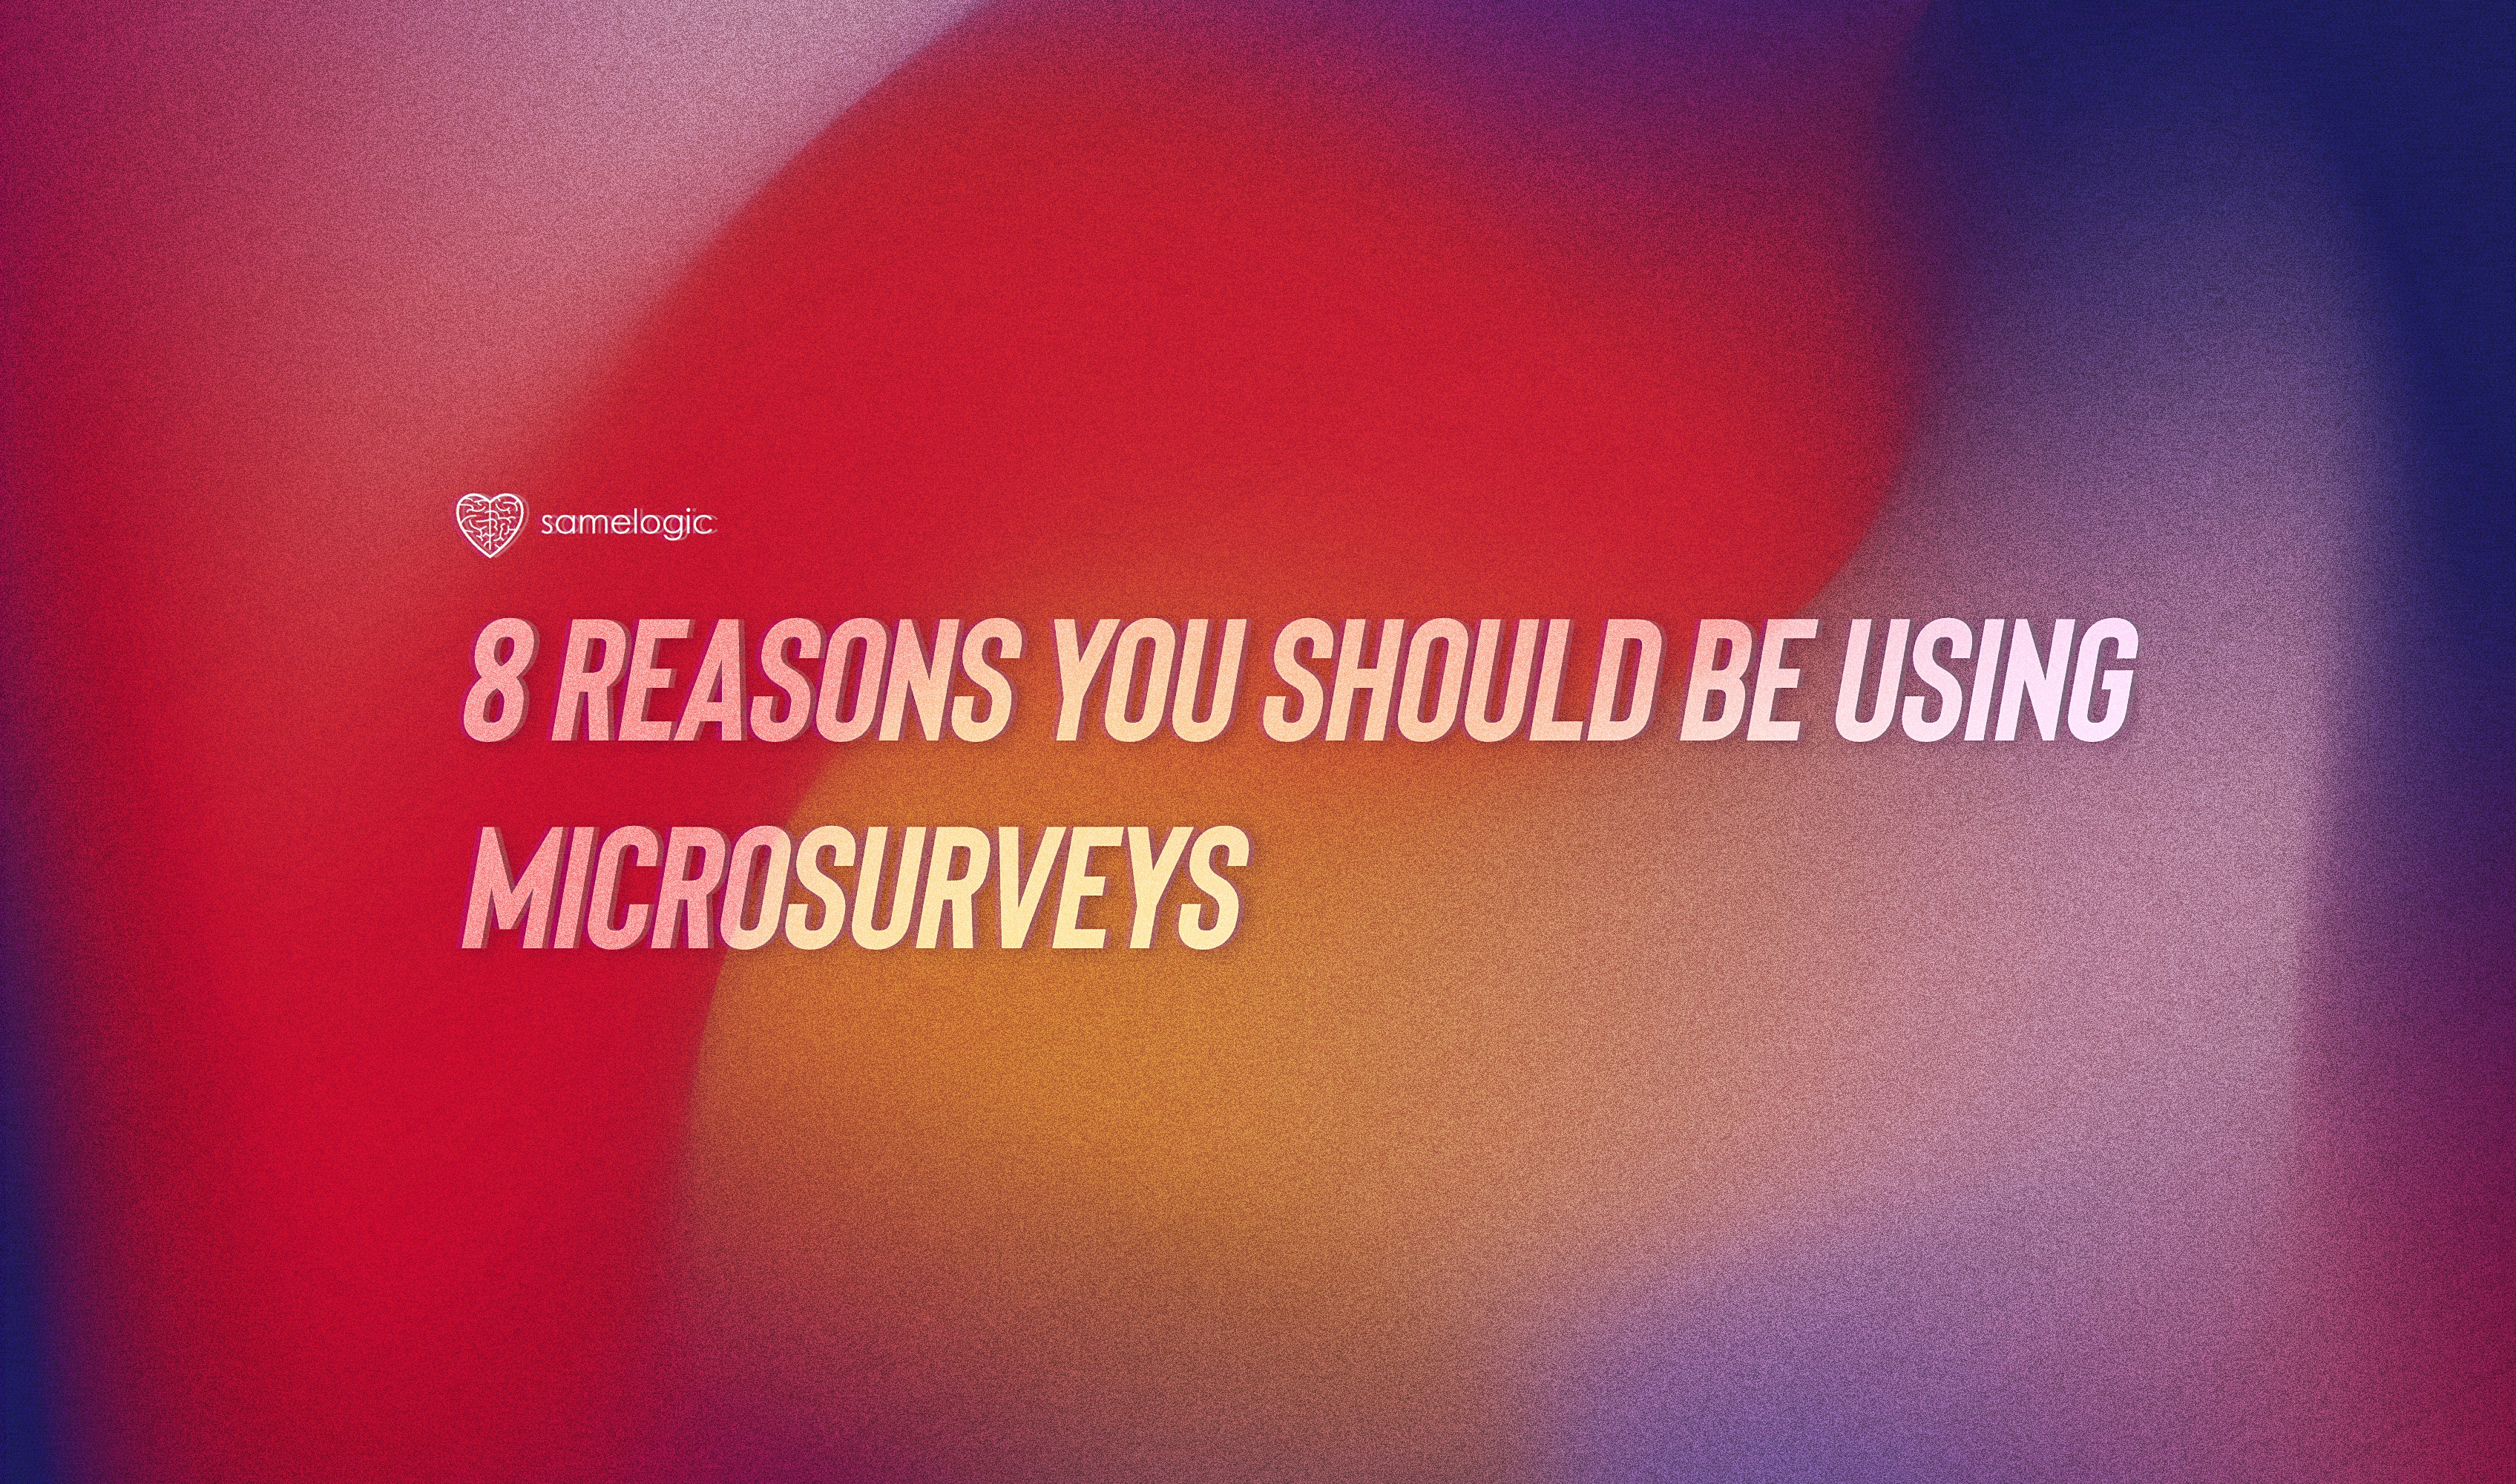 Samelogic | Reasons to Use Microsurveys